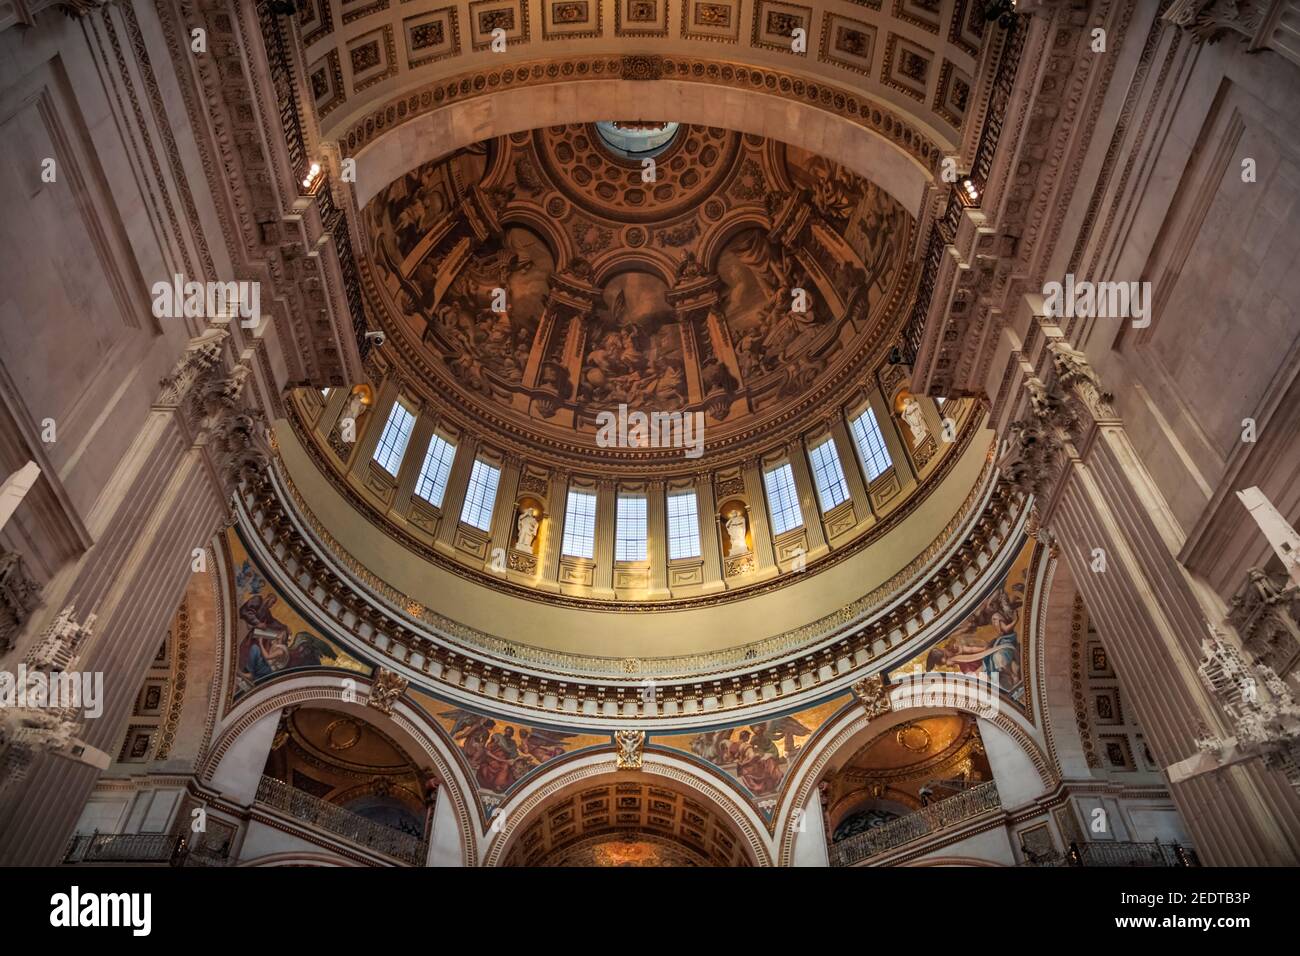 St. Paul's Cathedral Innenraum, Blick bis zur Decke Wandgemälde, Gemälde, Mosaiken, nd vergoldeten Dekorationen, innere Kuppel, London, England Stockfoto